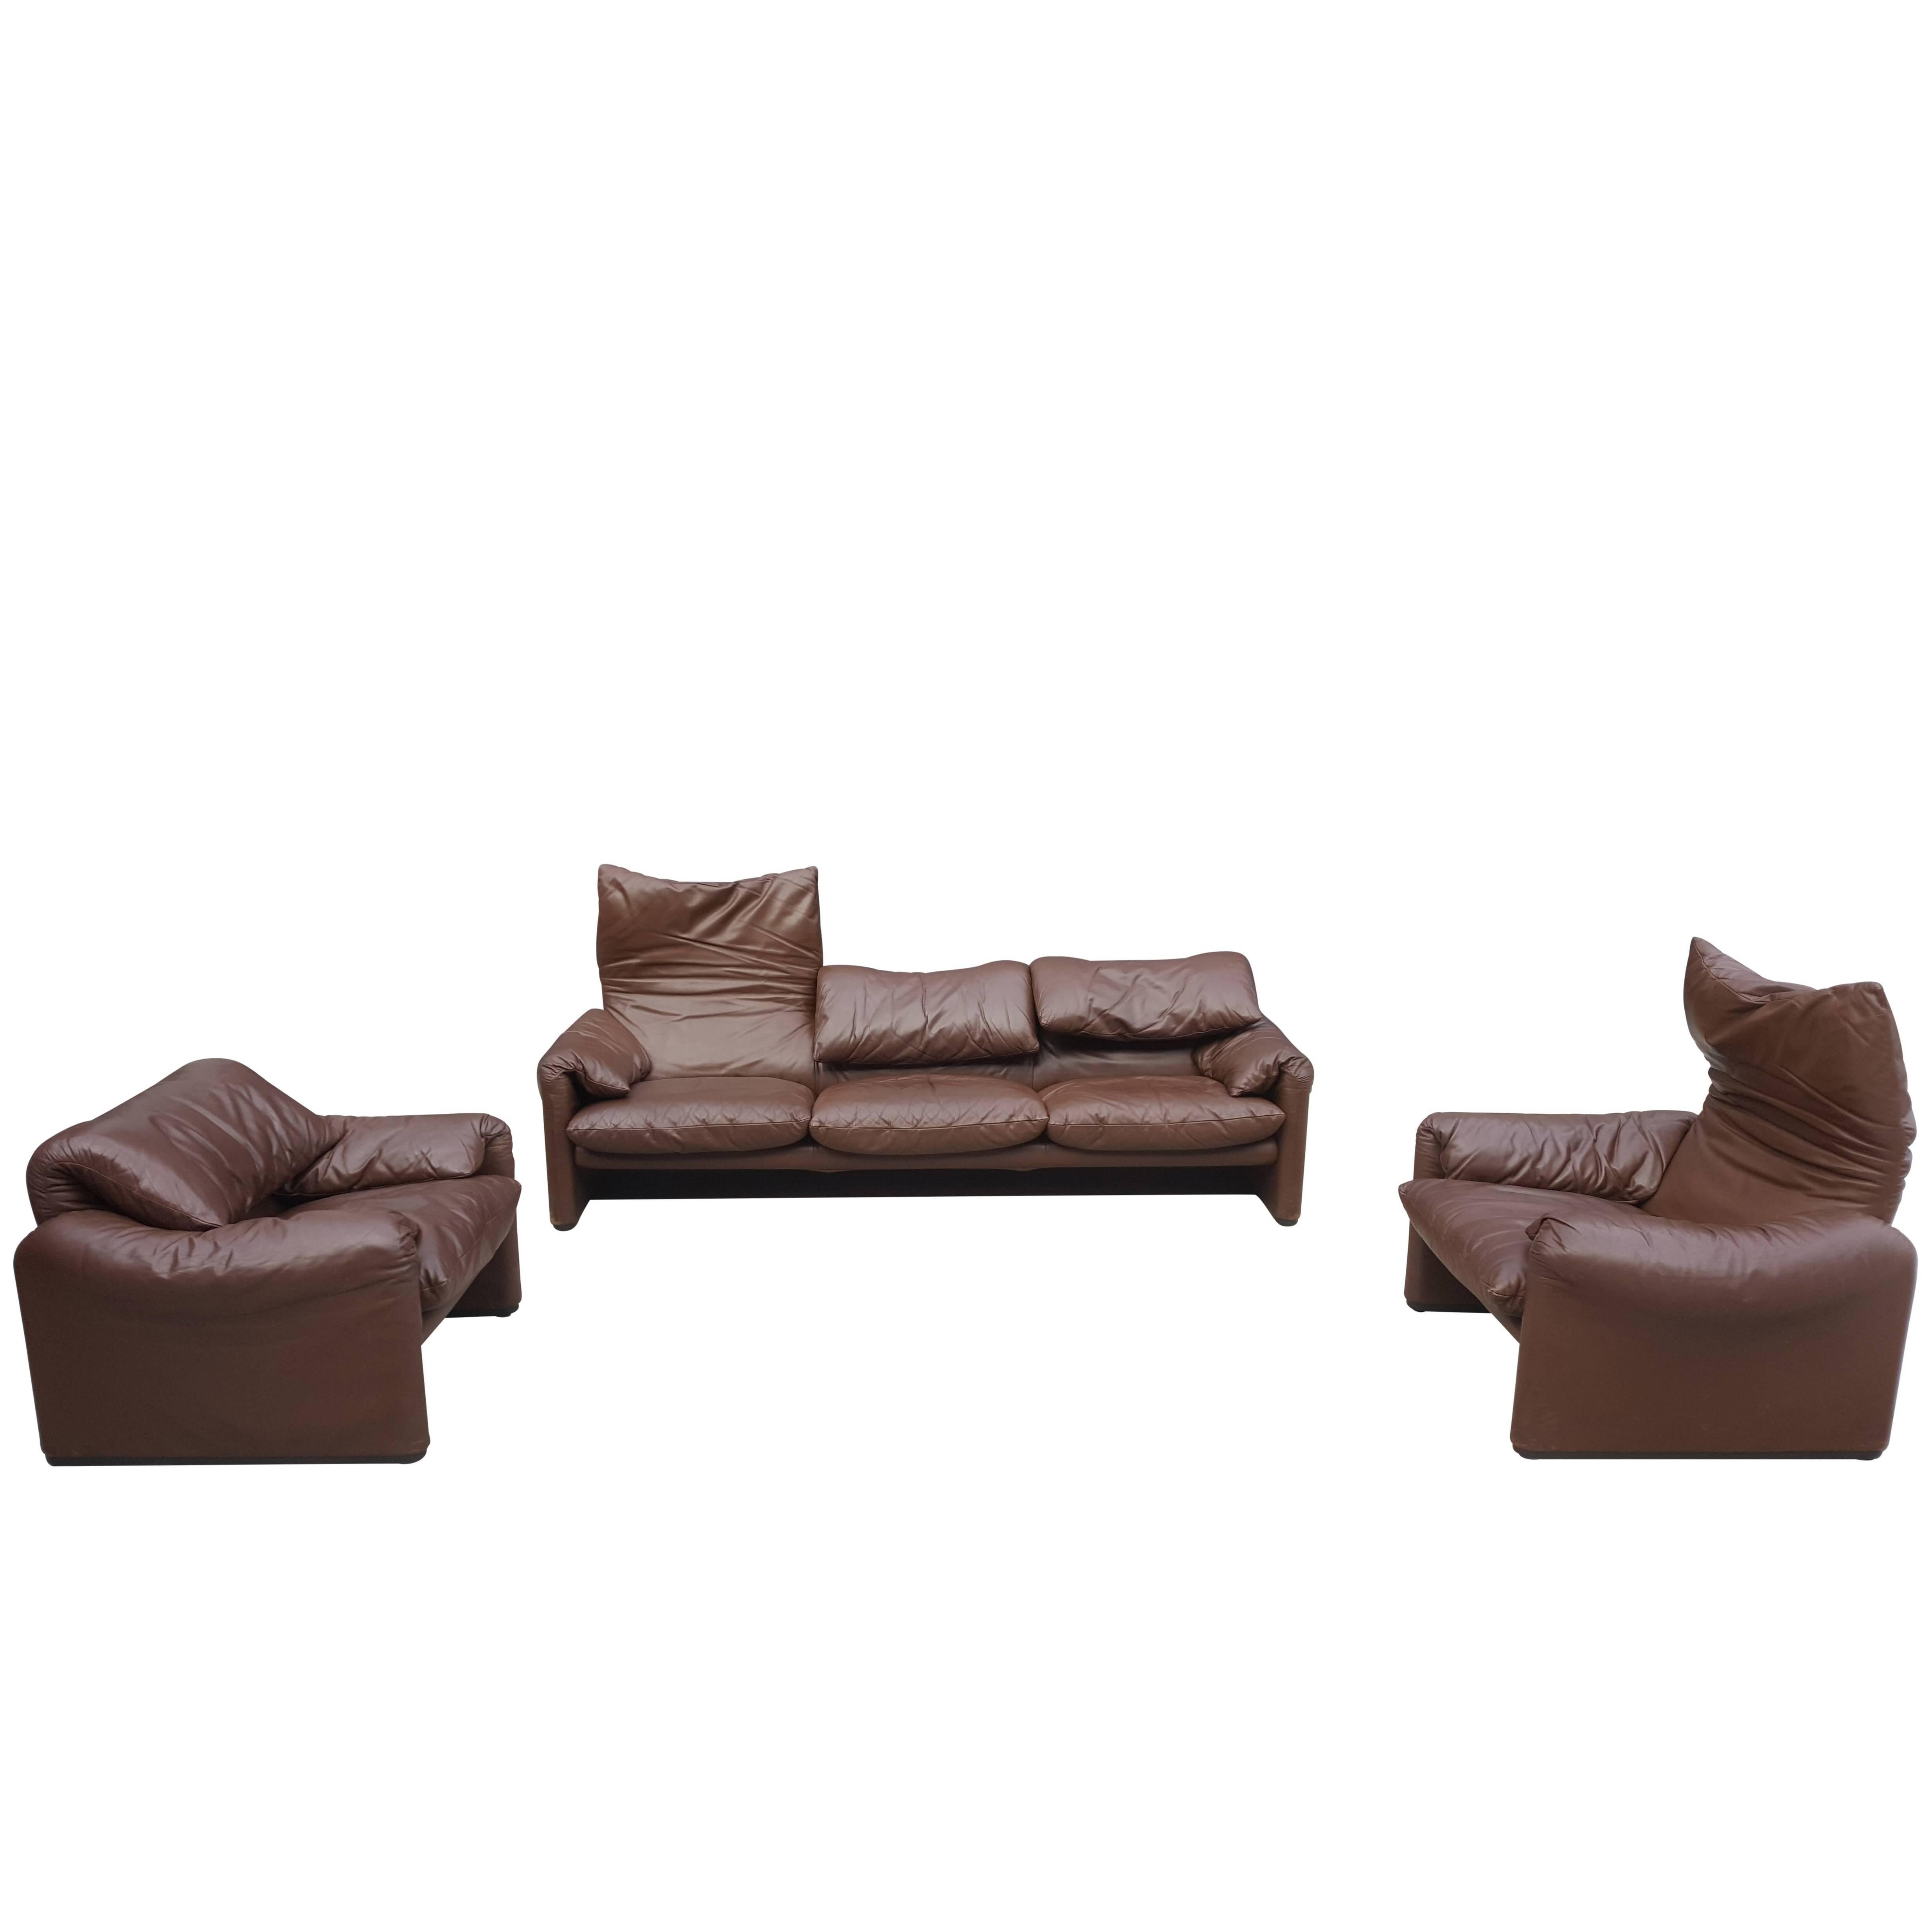 Maralunga Brown Choclat Sofa Set by Vico Magistretti for Cassina